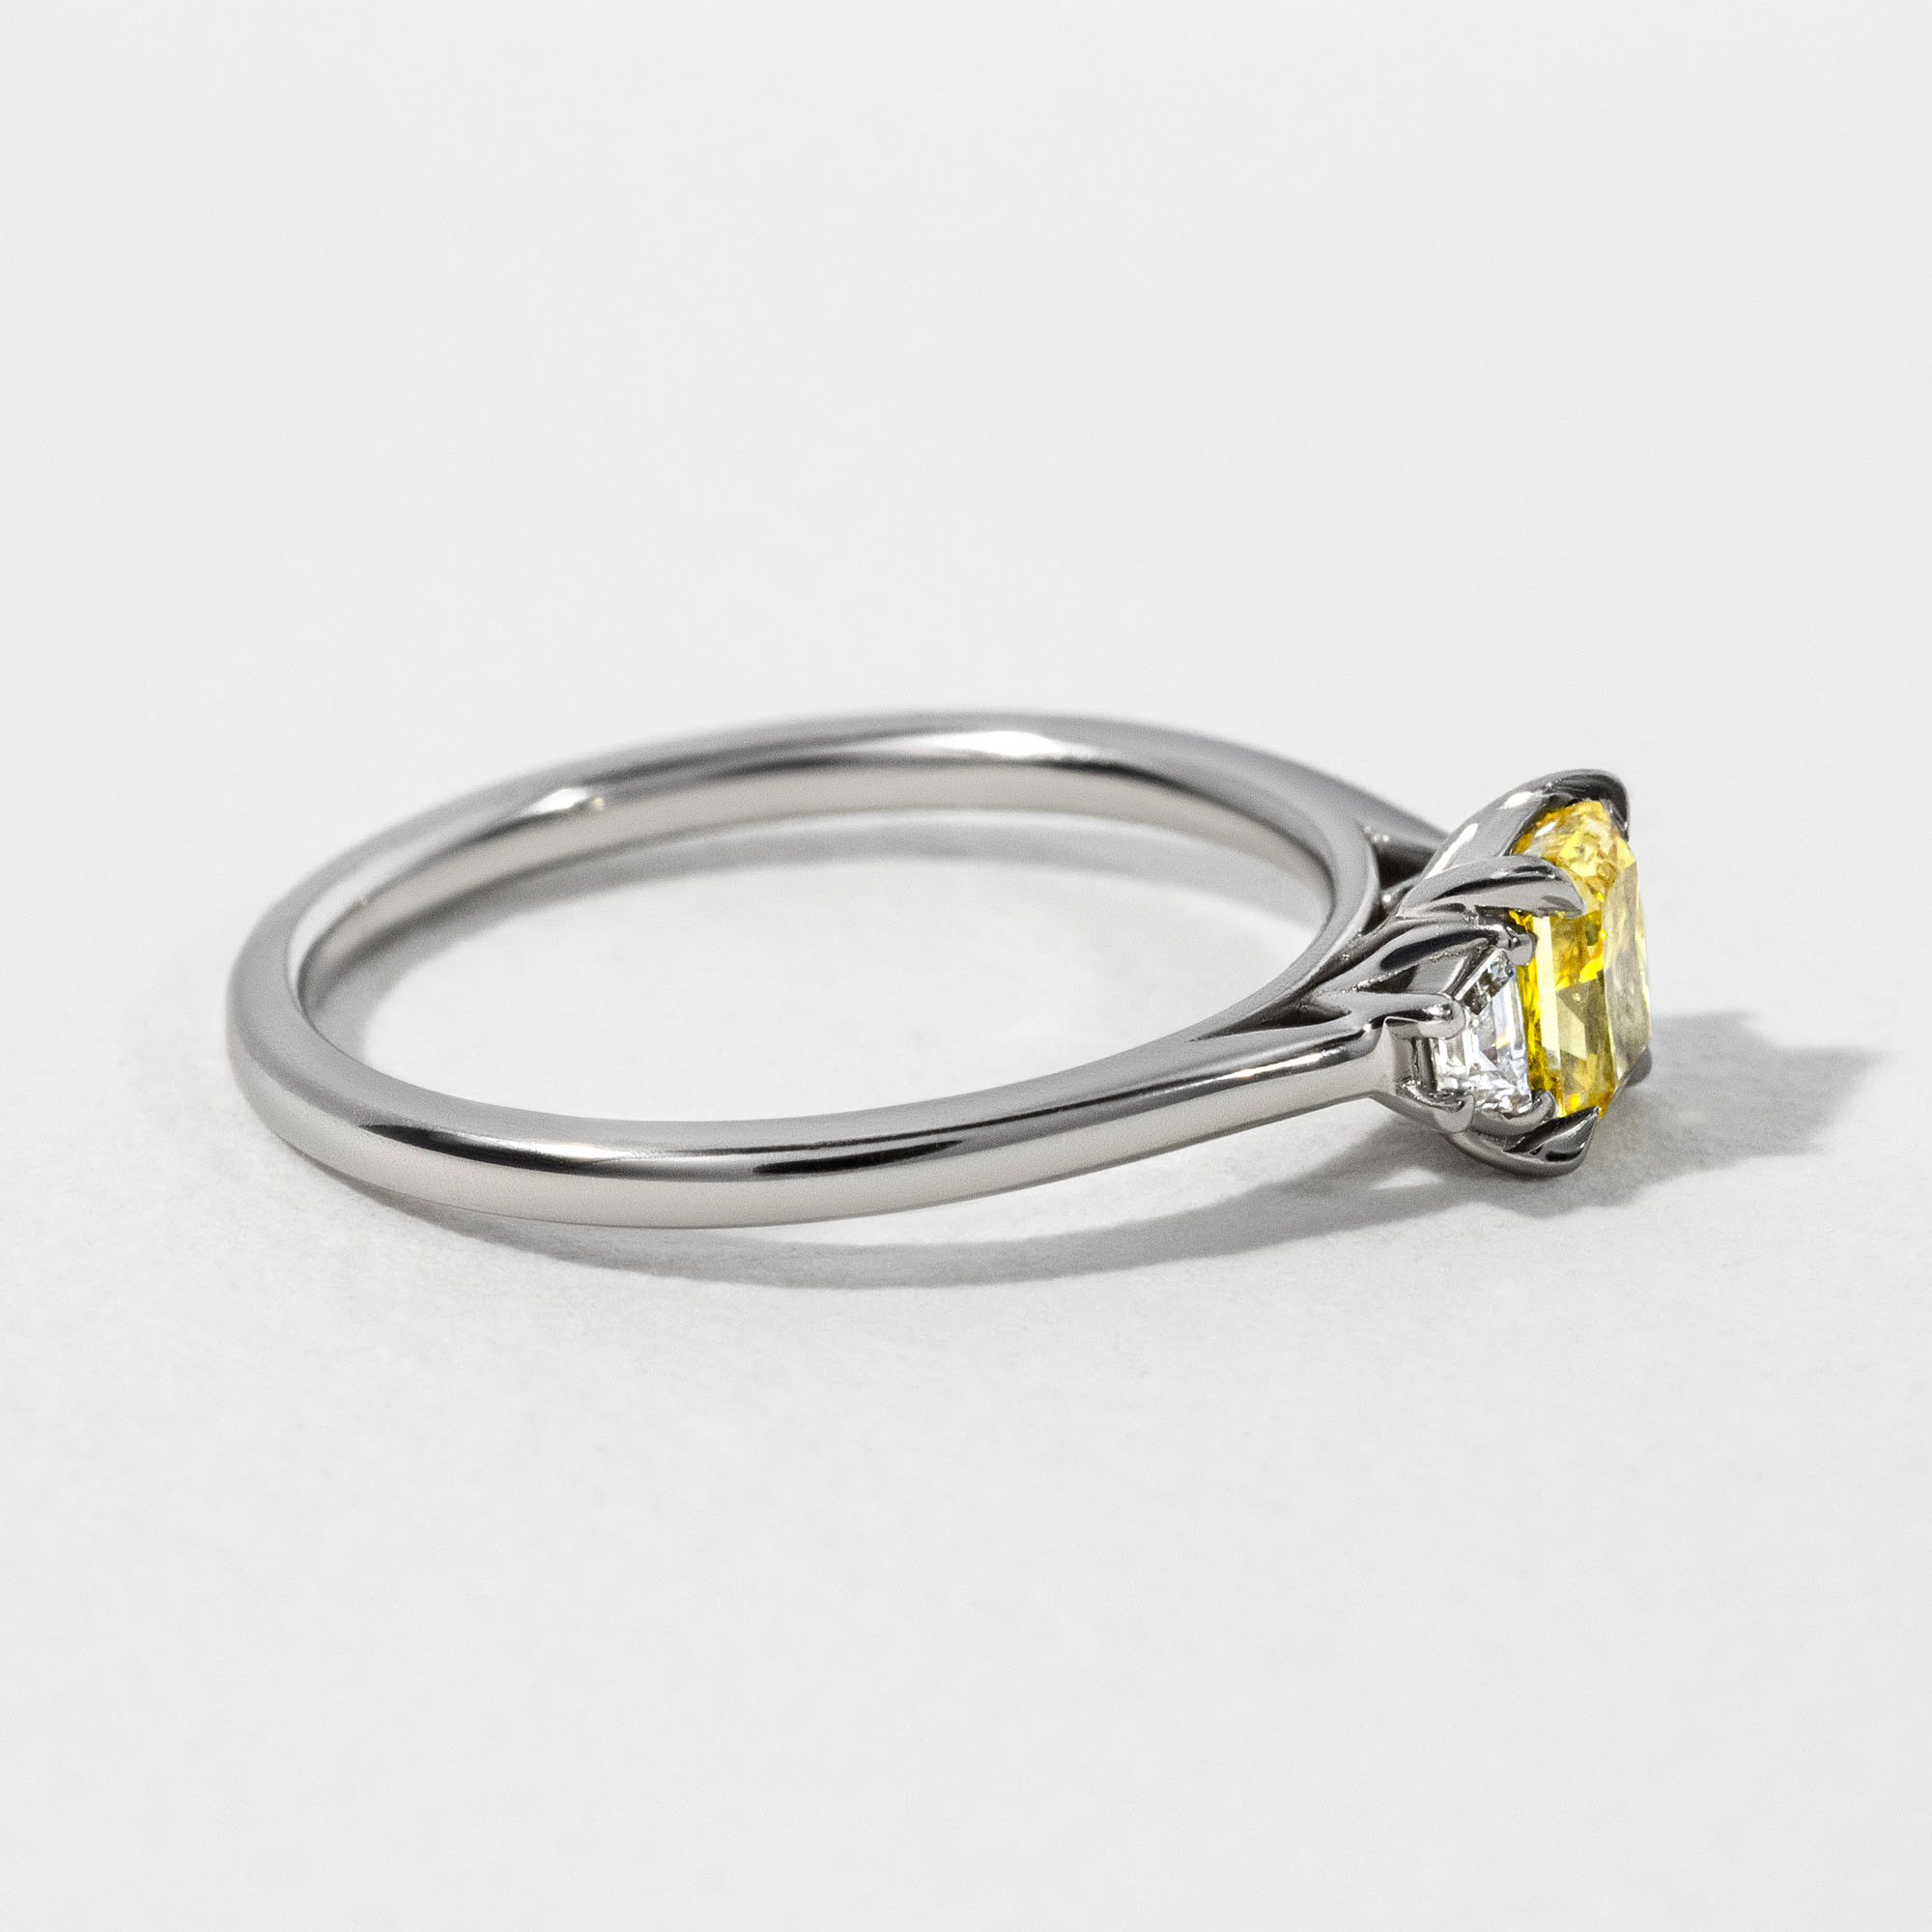 Radiant Yellow Gemstone Trilogy Engagement Ring